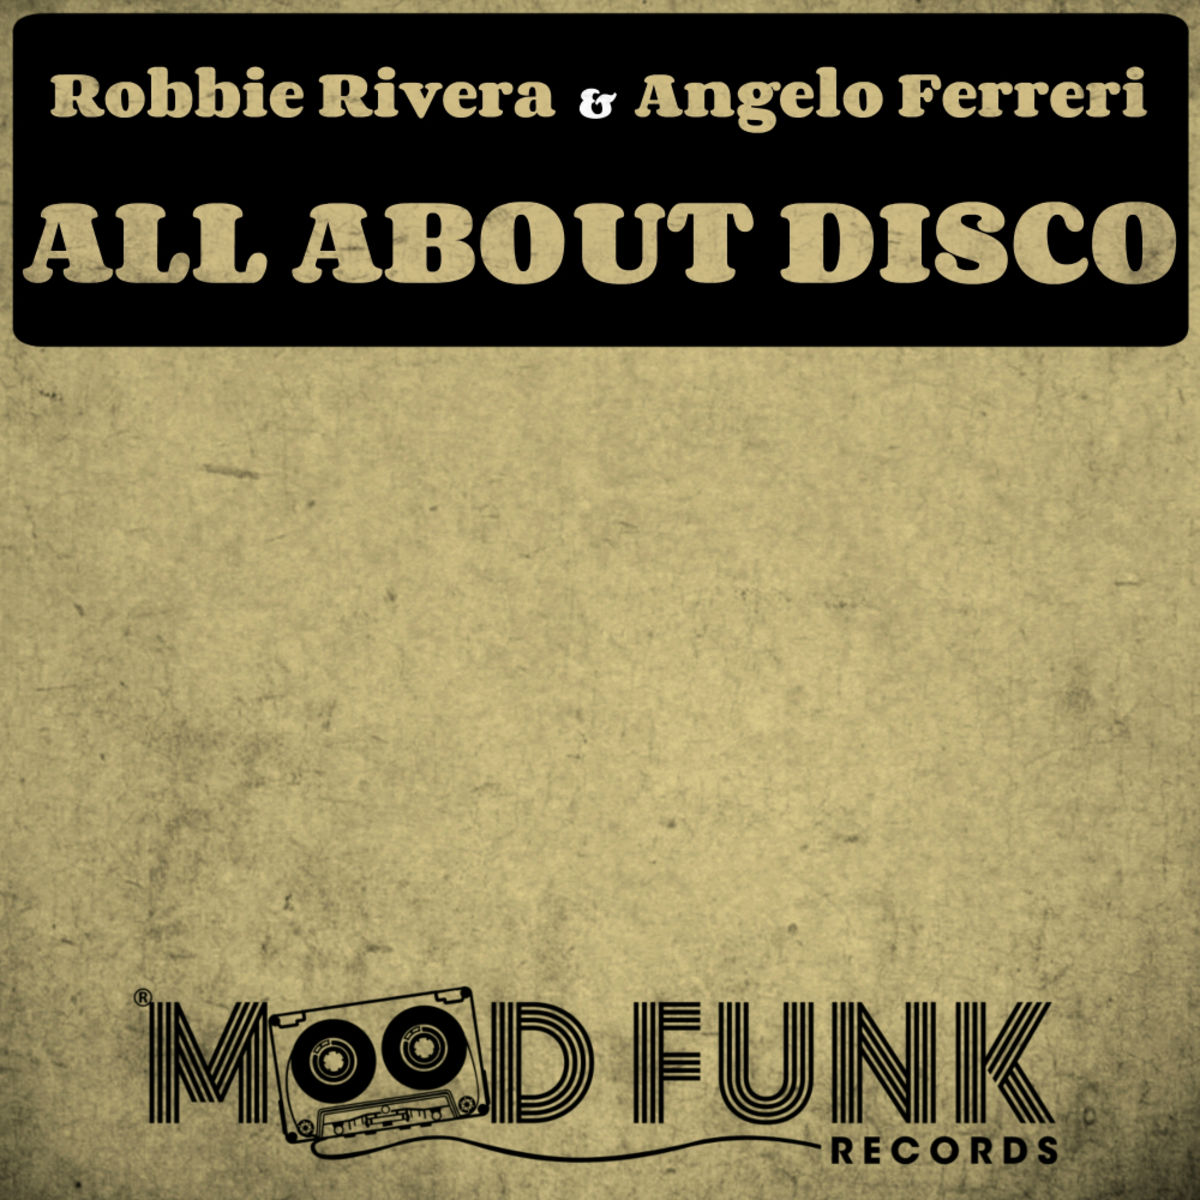 Robbie Rivera & Angelo Ferreri - All About Disco / Mood Funk Records